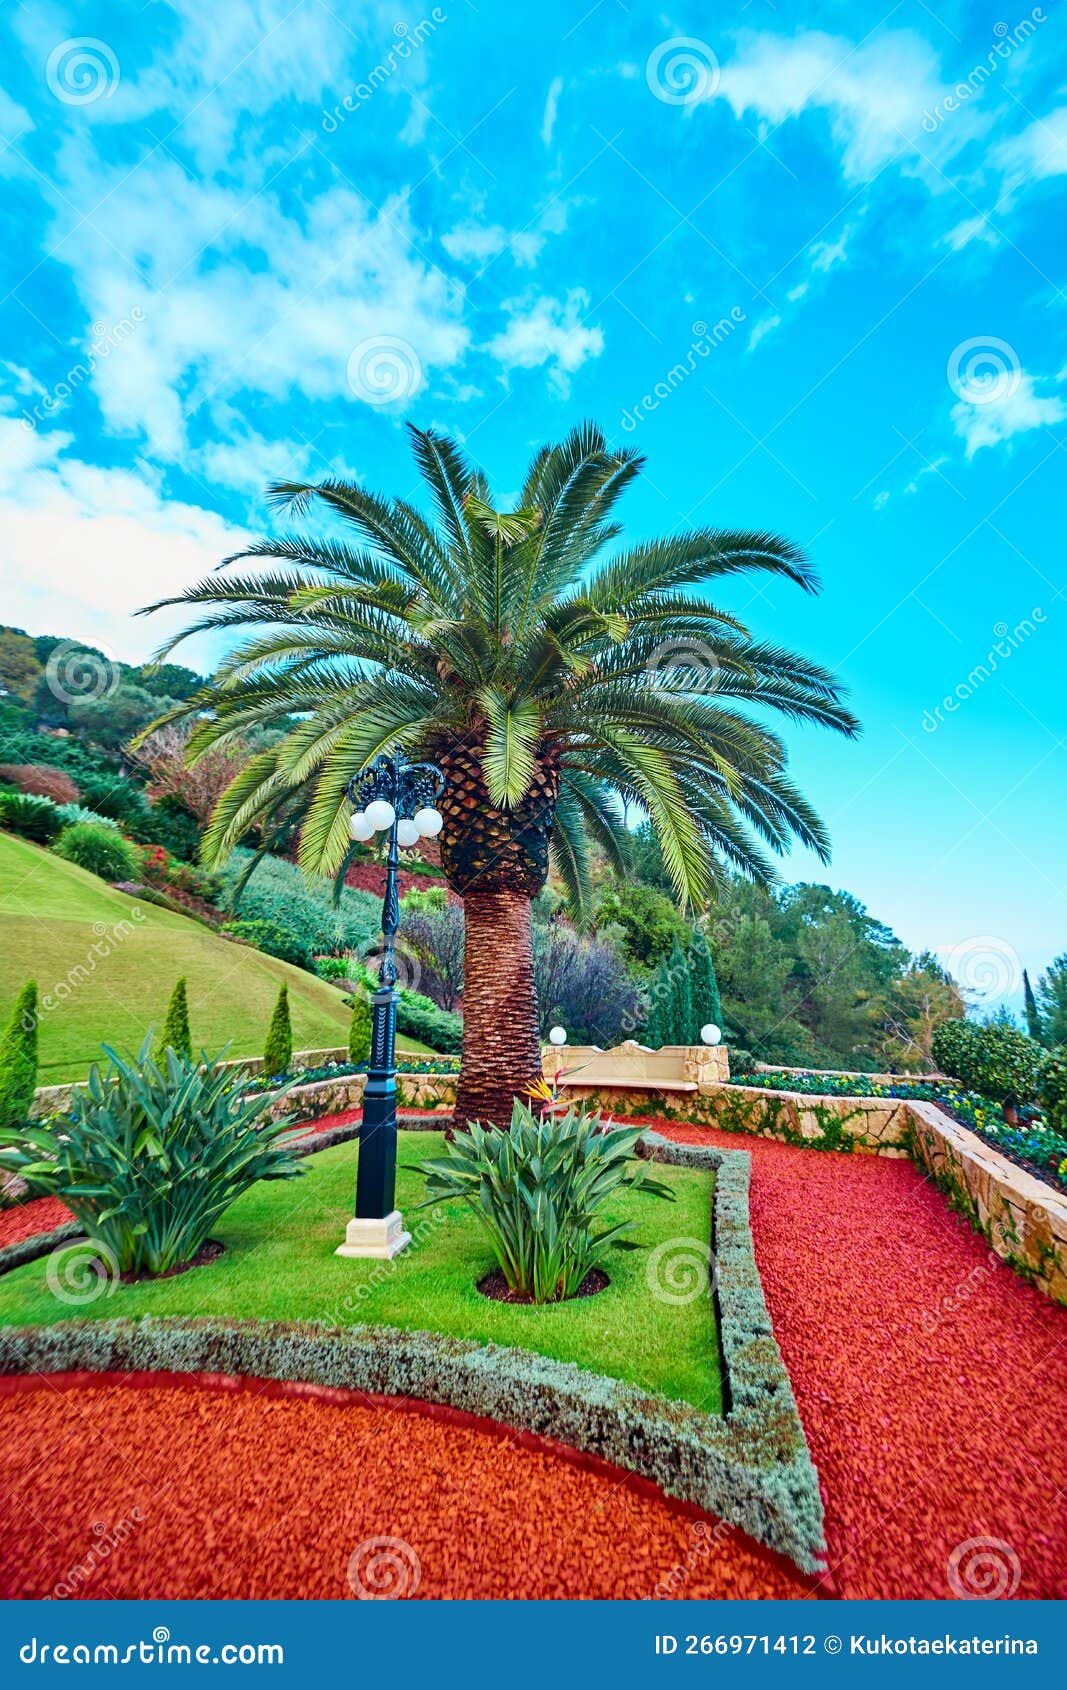 baha`i gardens, also the terraces of the baha`i faith, the hanging gardens of haifa